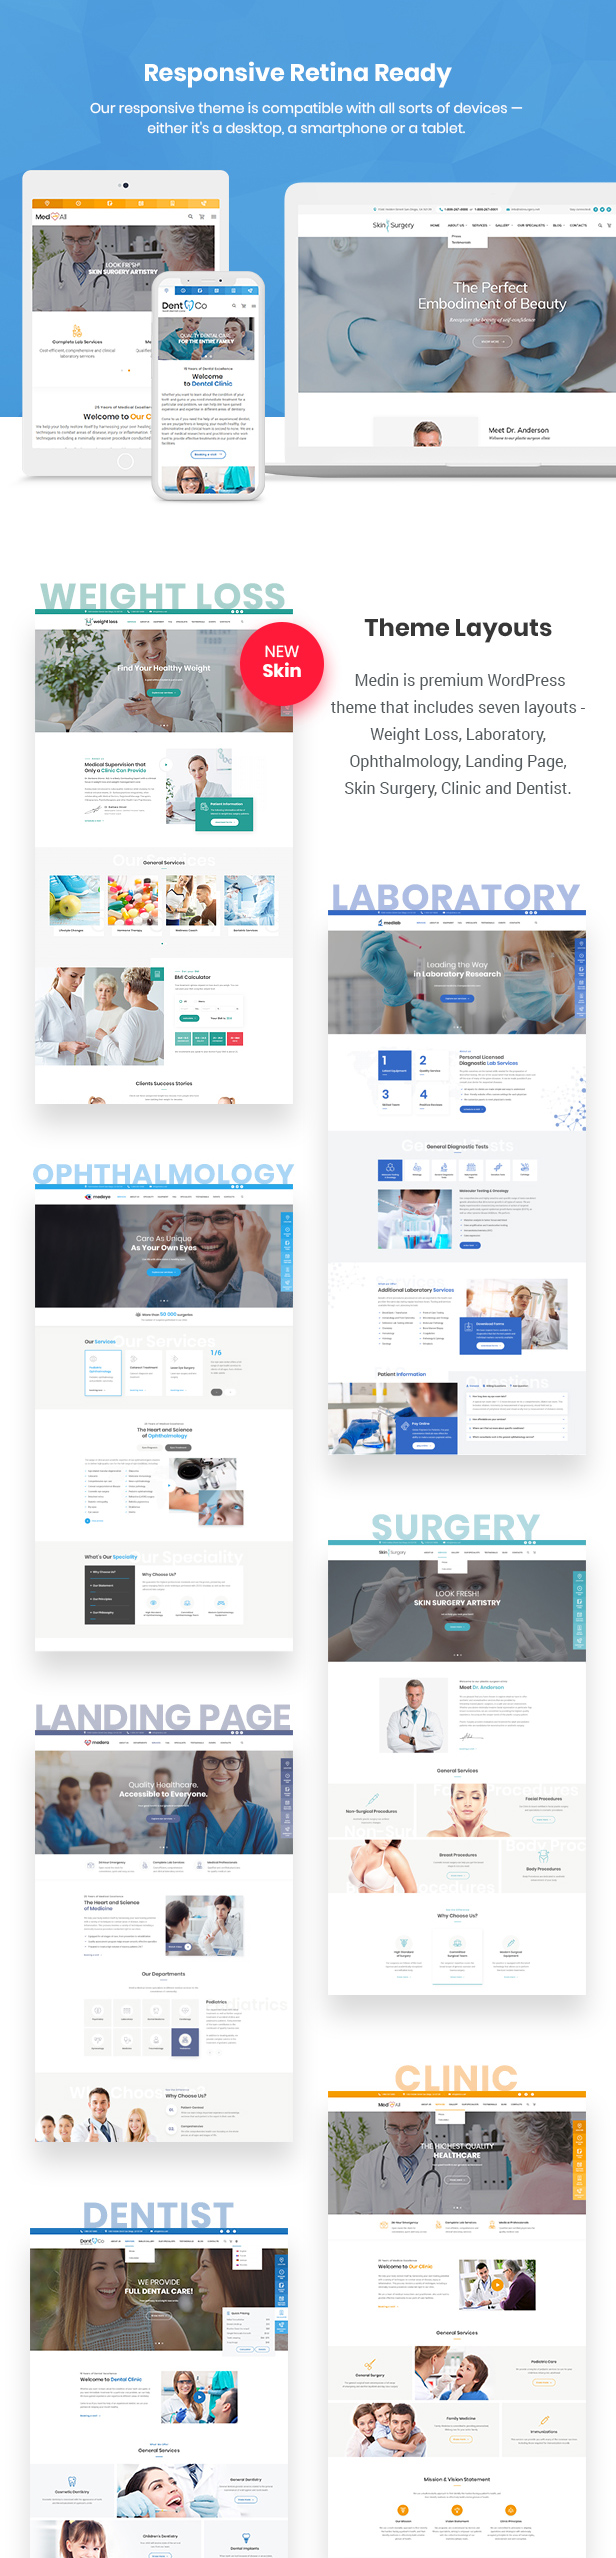 Medin - Medical Center WordPress Theme - 6